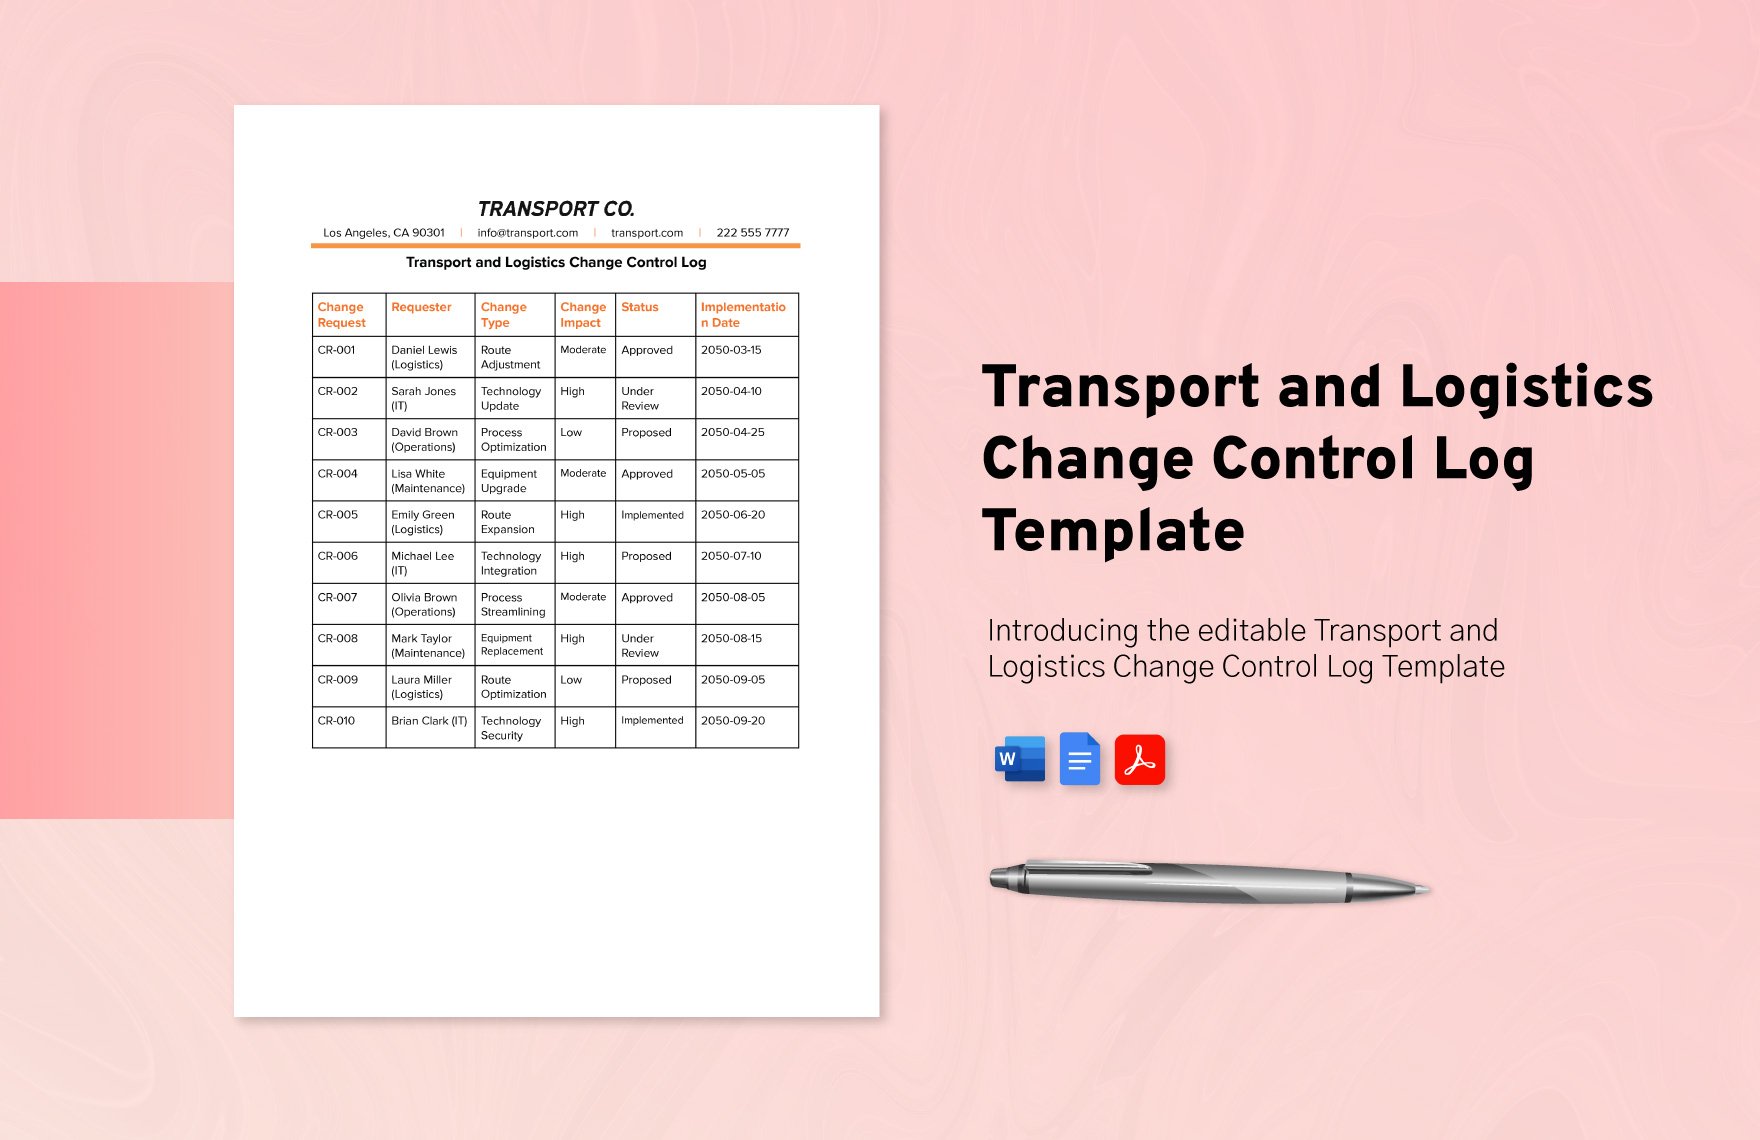 Transport and Logistics Change Control Log Template